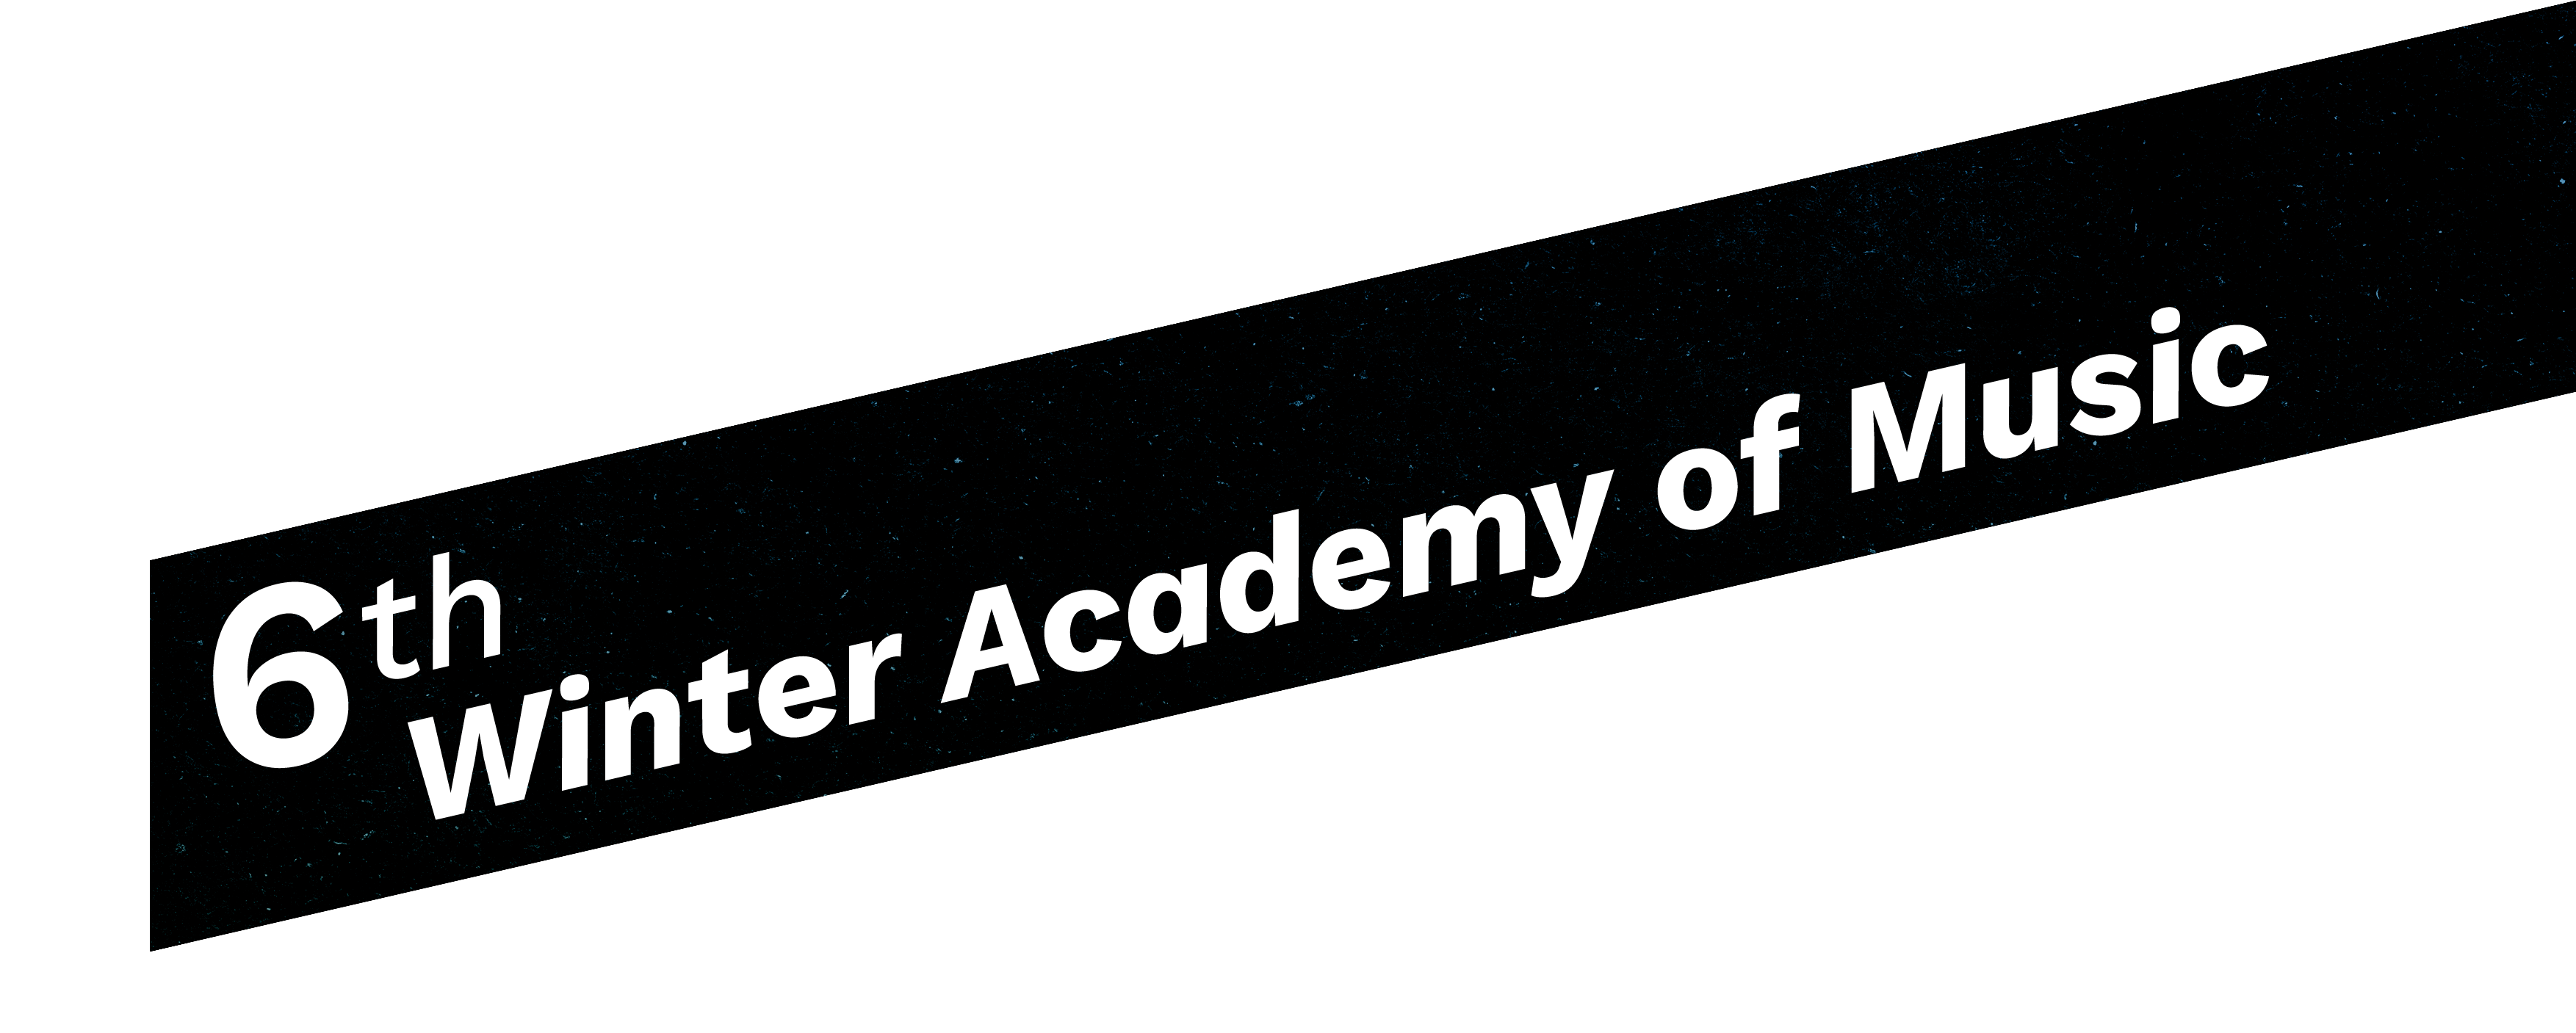 6th Winter Academy of Music